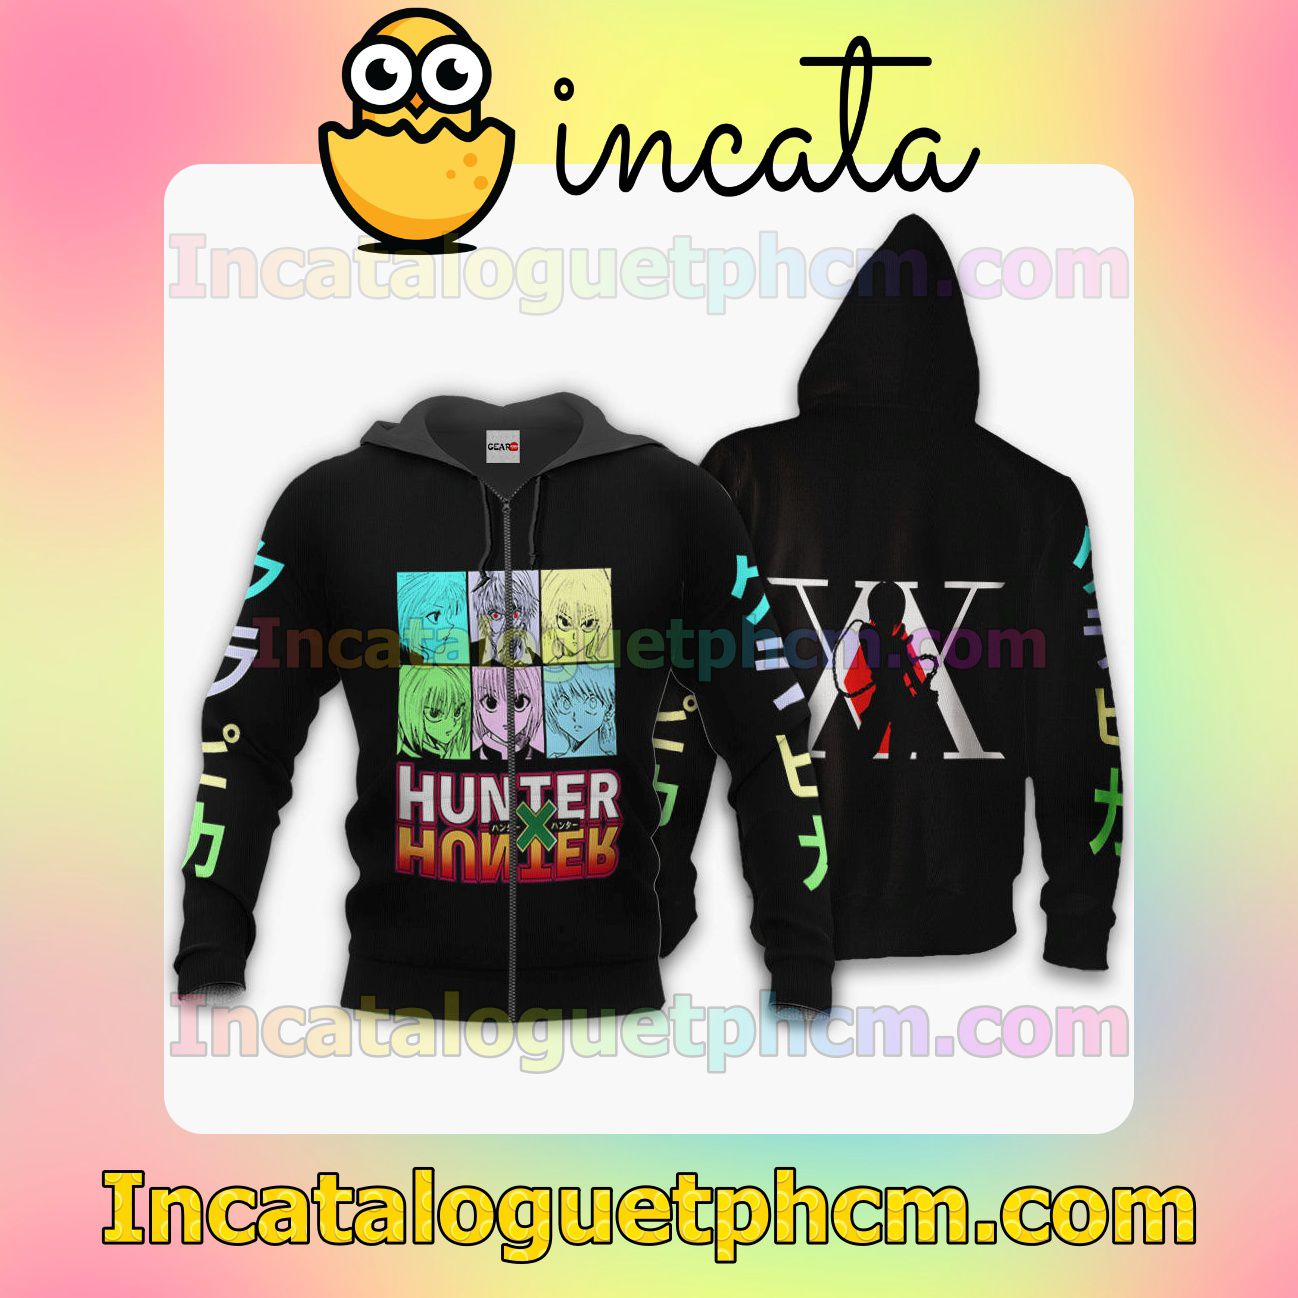 Kurapika Hunter x Hunter Anime Modern Style Clothing Merch Zip Hoodie Jacket Shirts